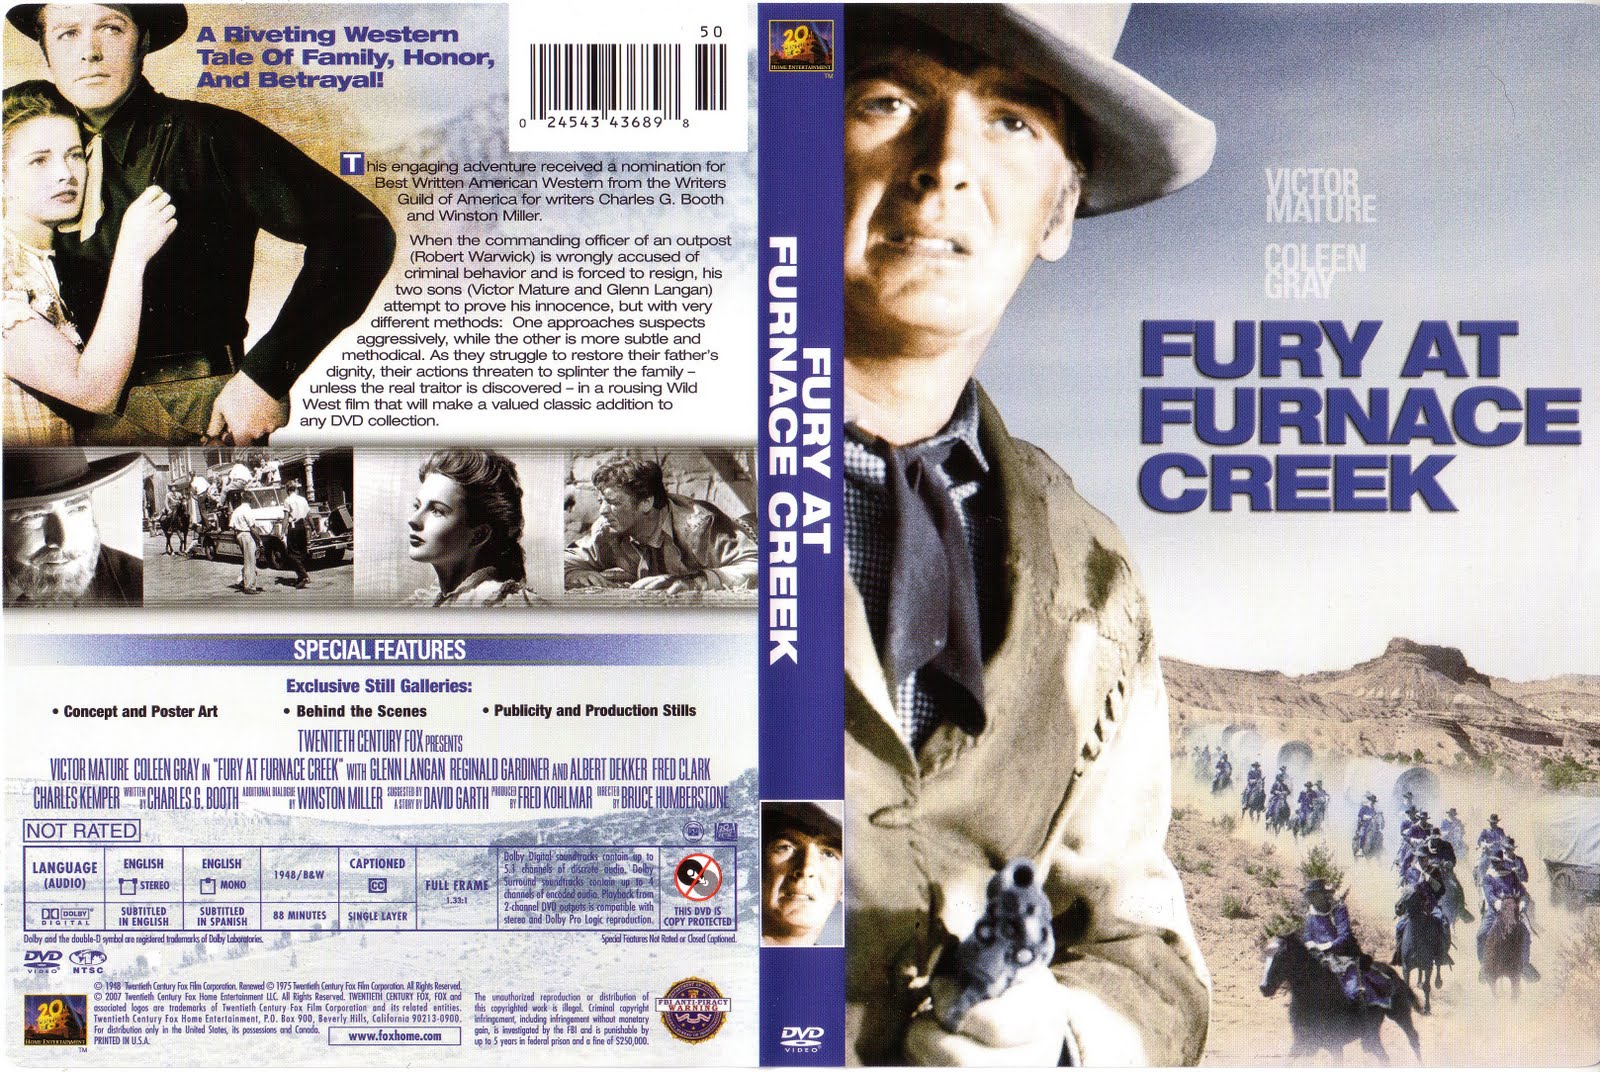 Fury at Furnace Creek 1948